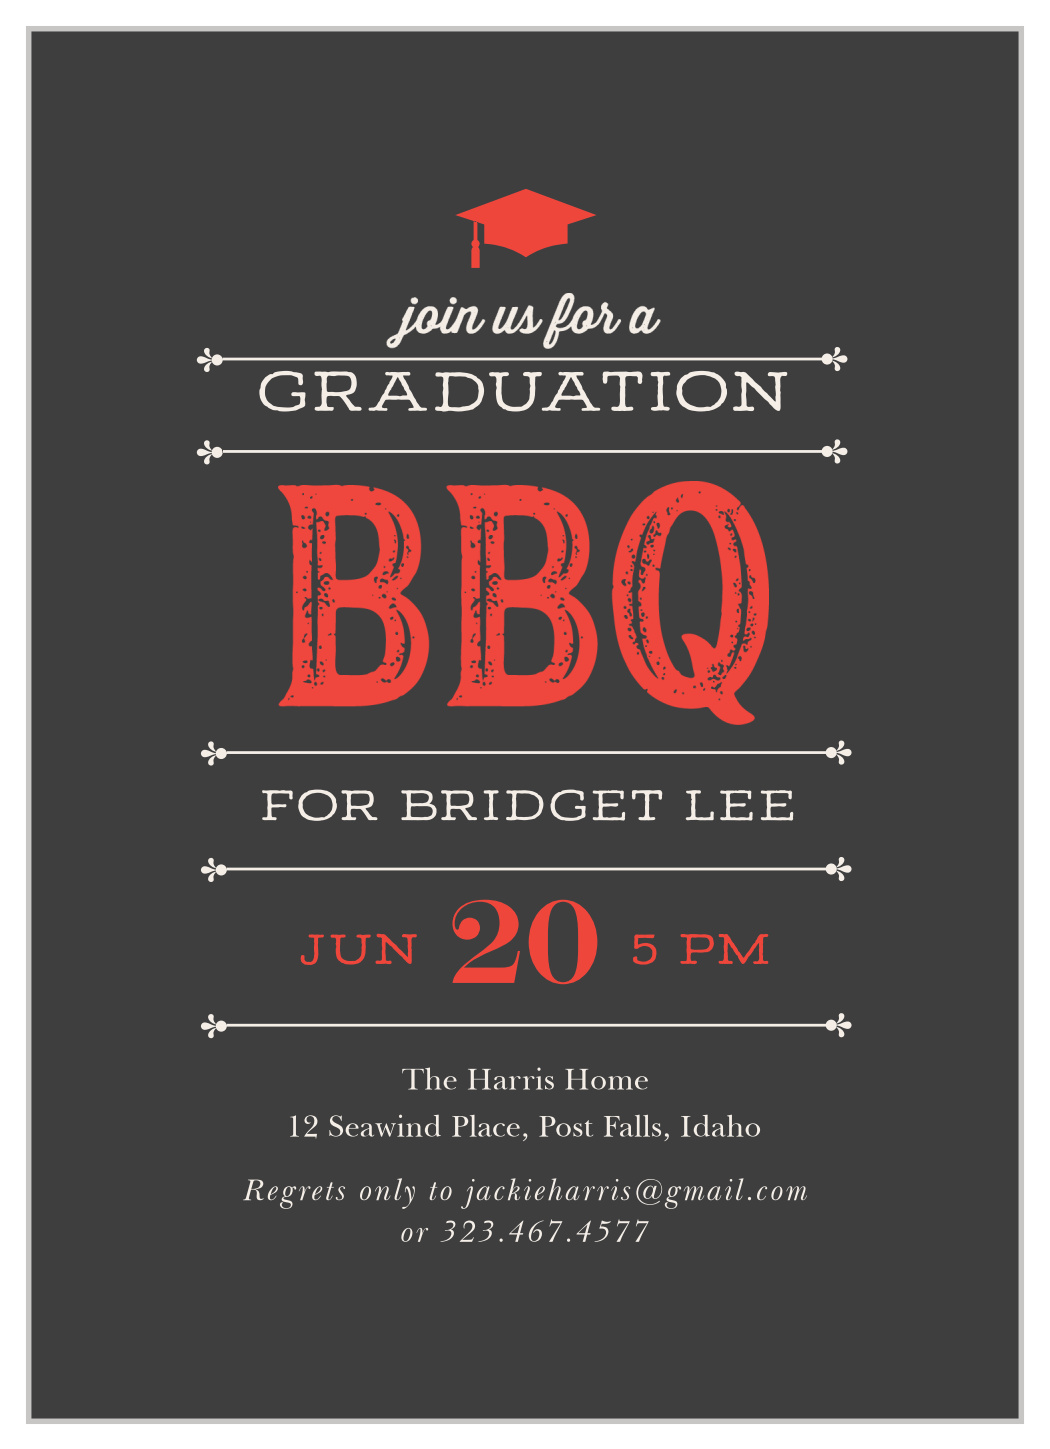 bbq-celebration-graduation-invitations-by-basic-invite